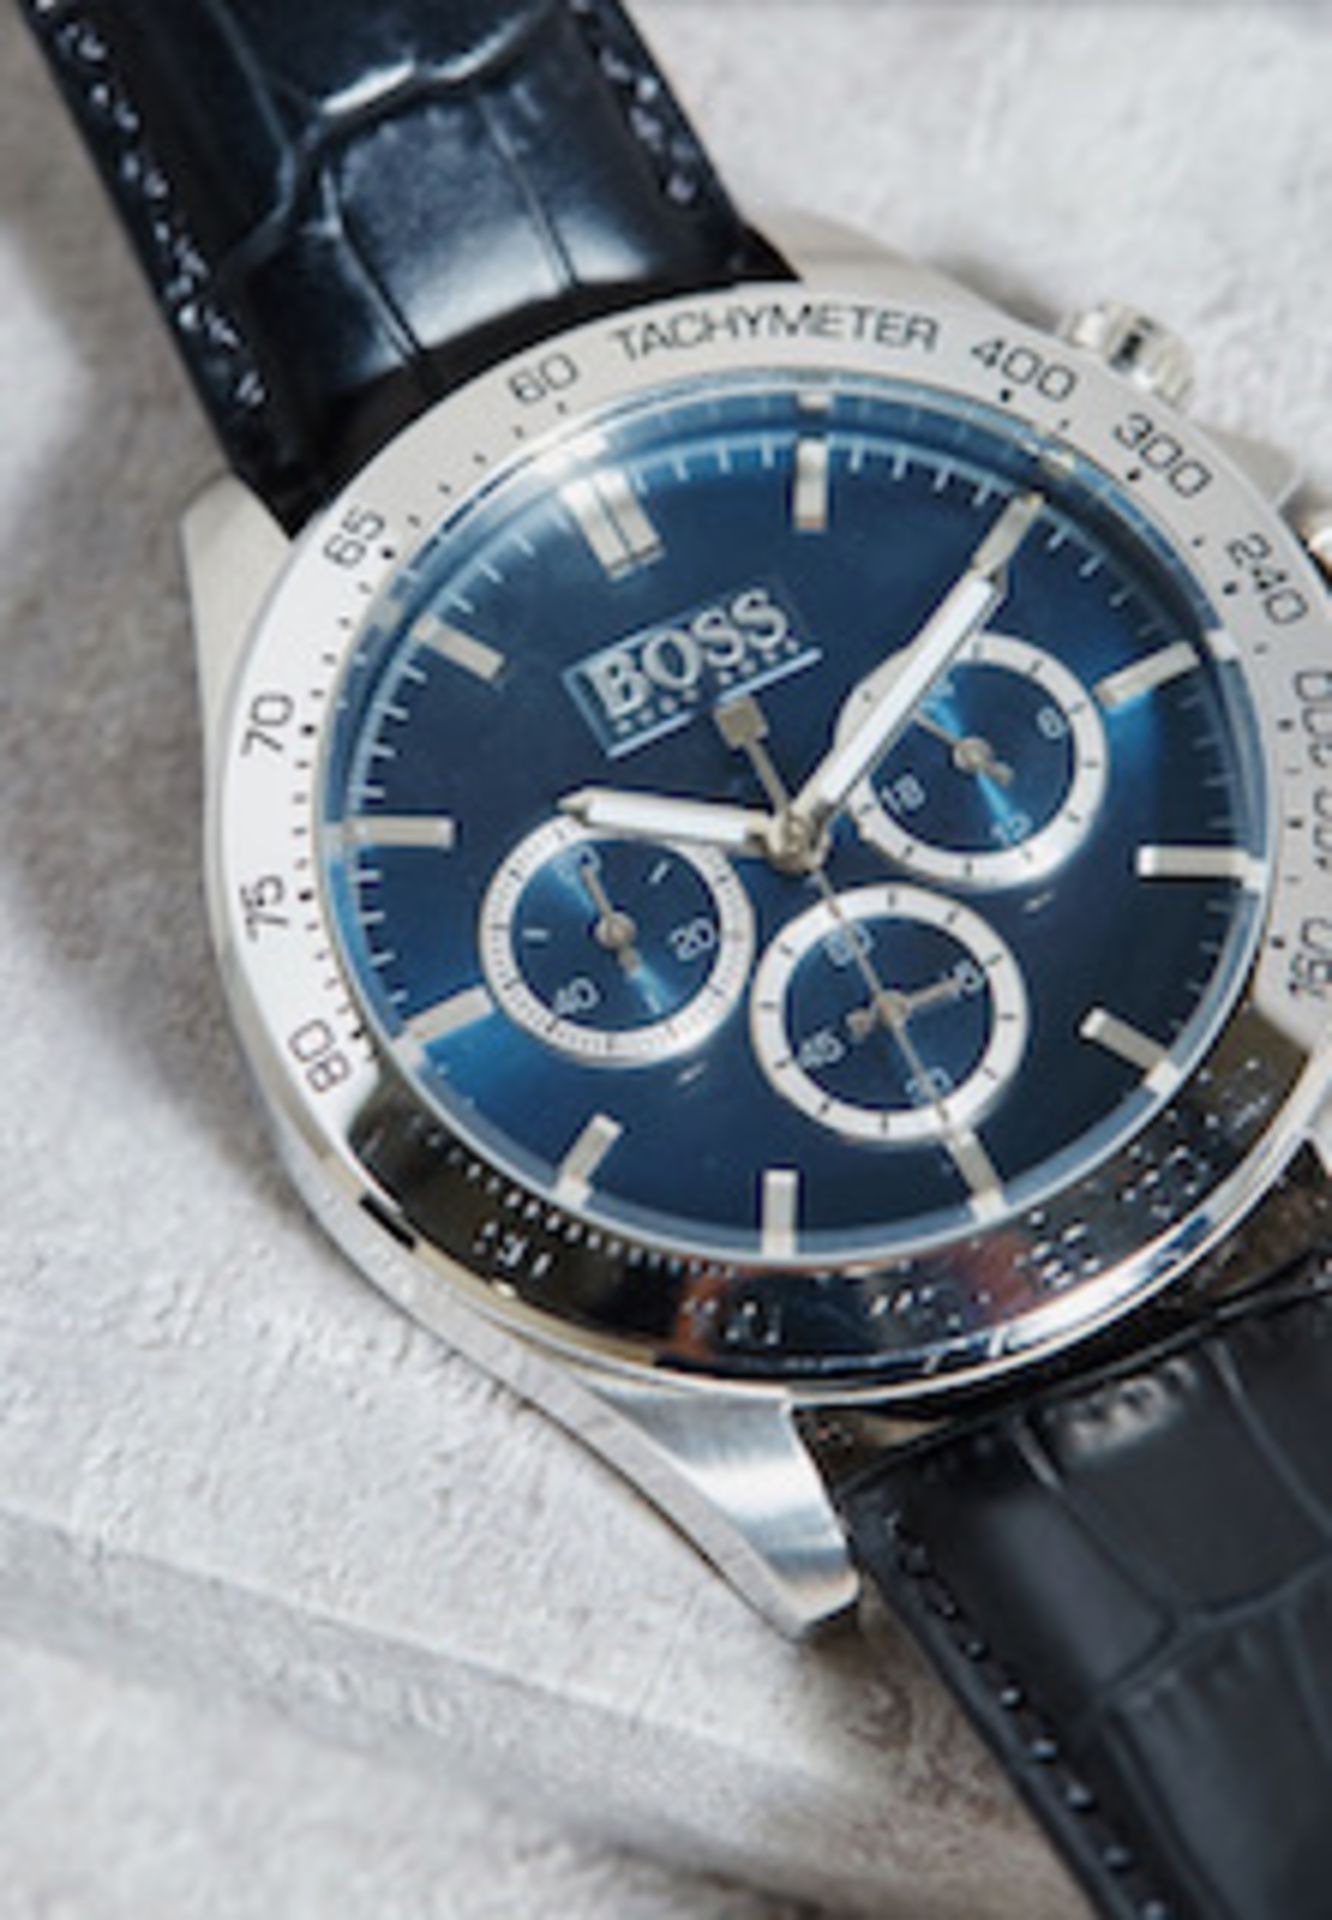 Hugo Boss 1513176 Men's Ikon Blue Dial Black Leather Strap Chronograph Watch - Image 5 of 5